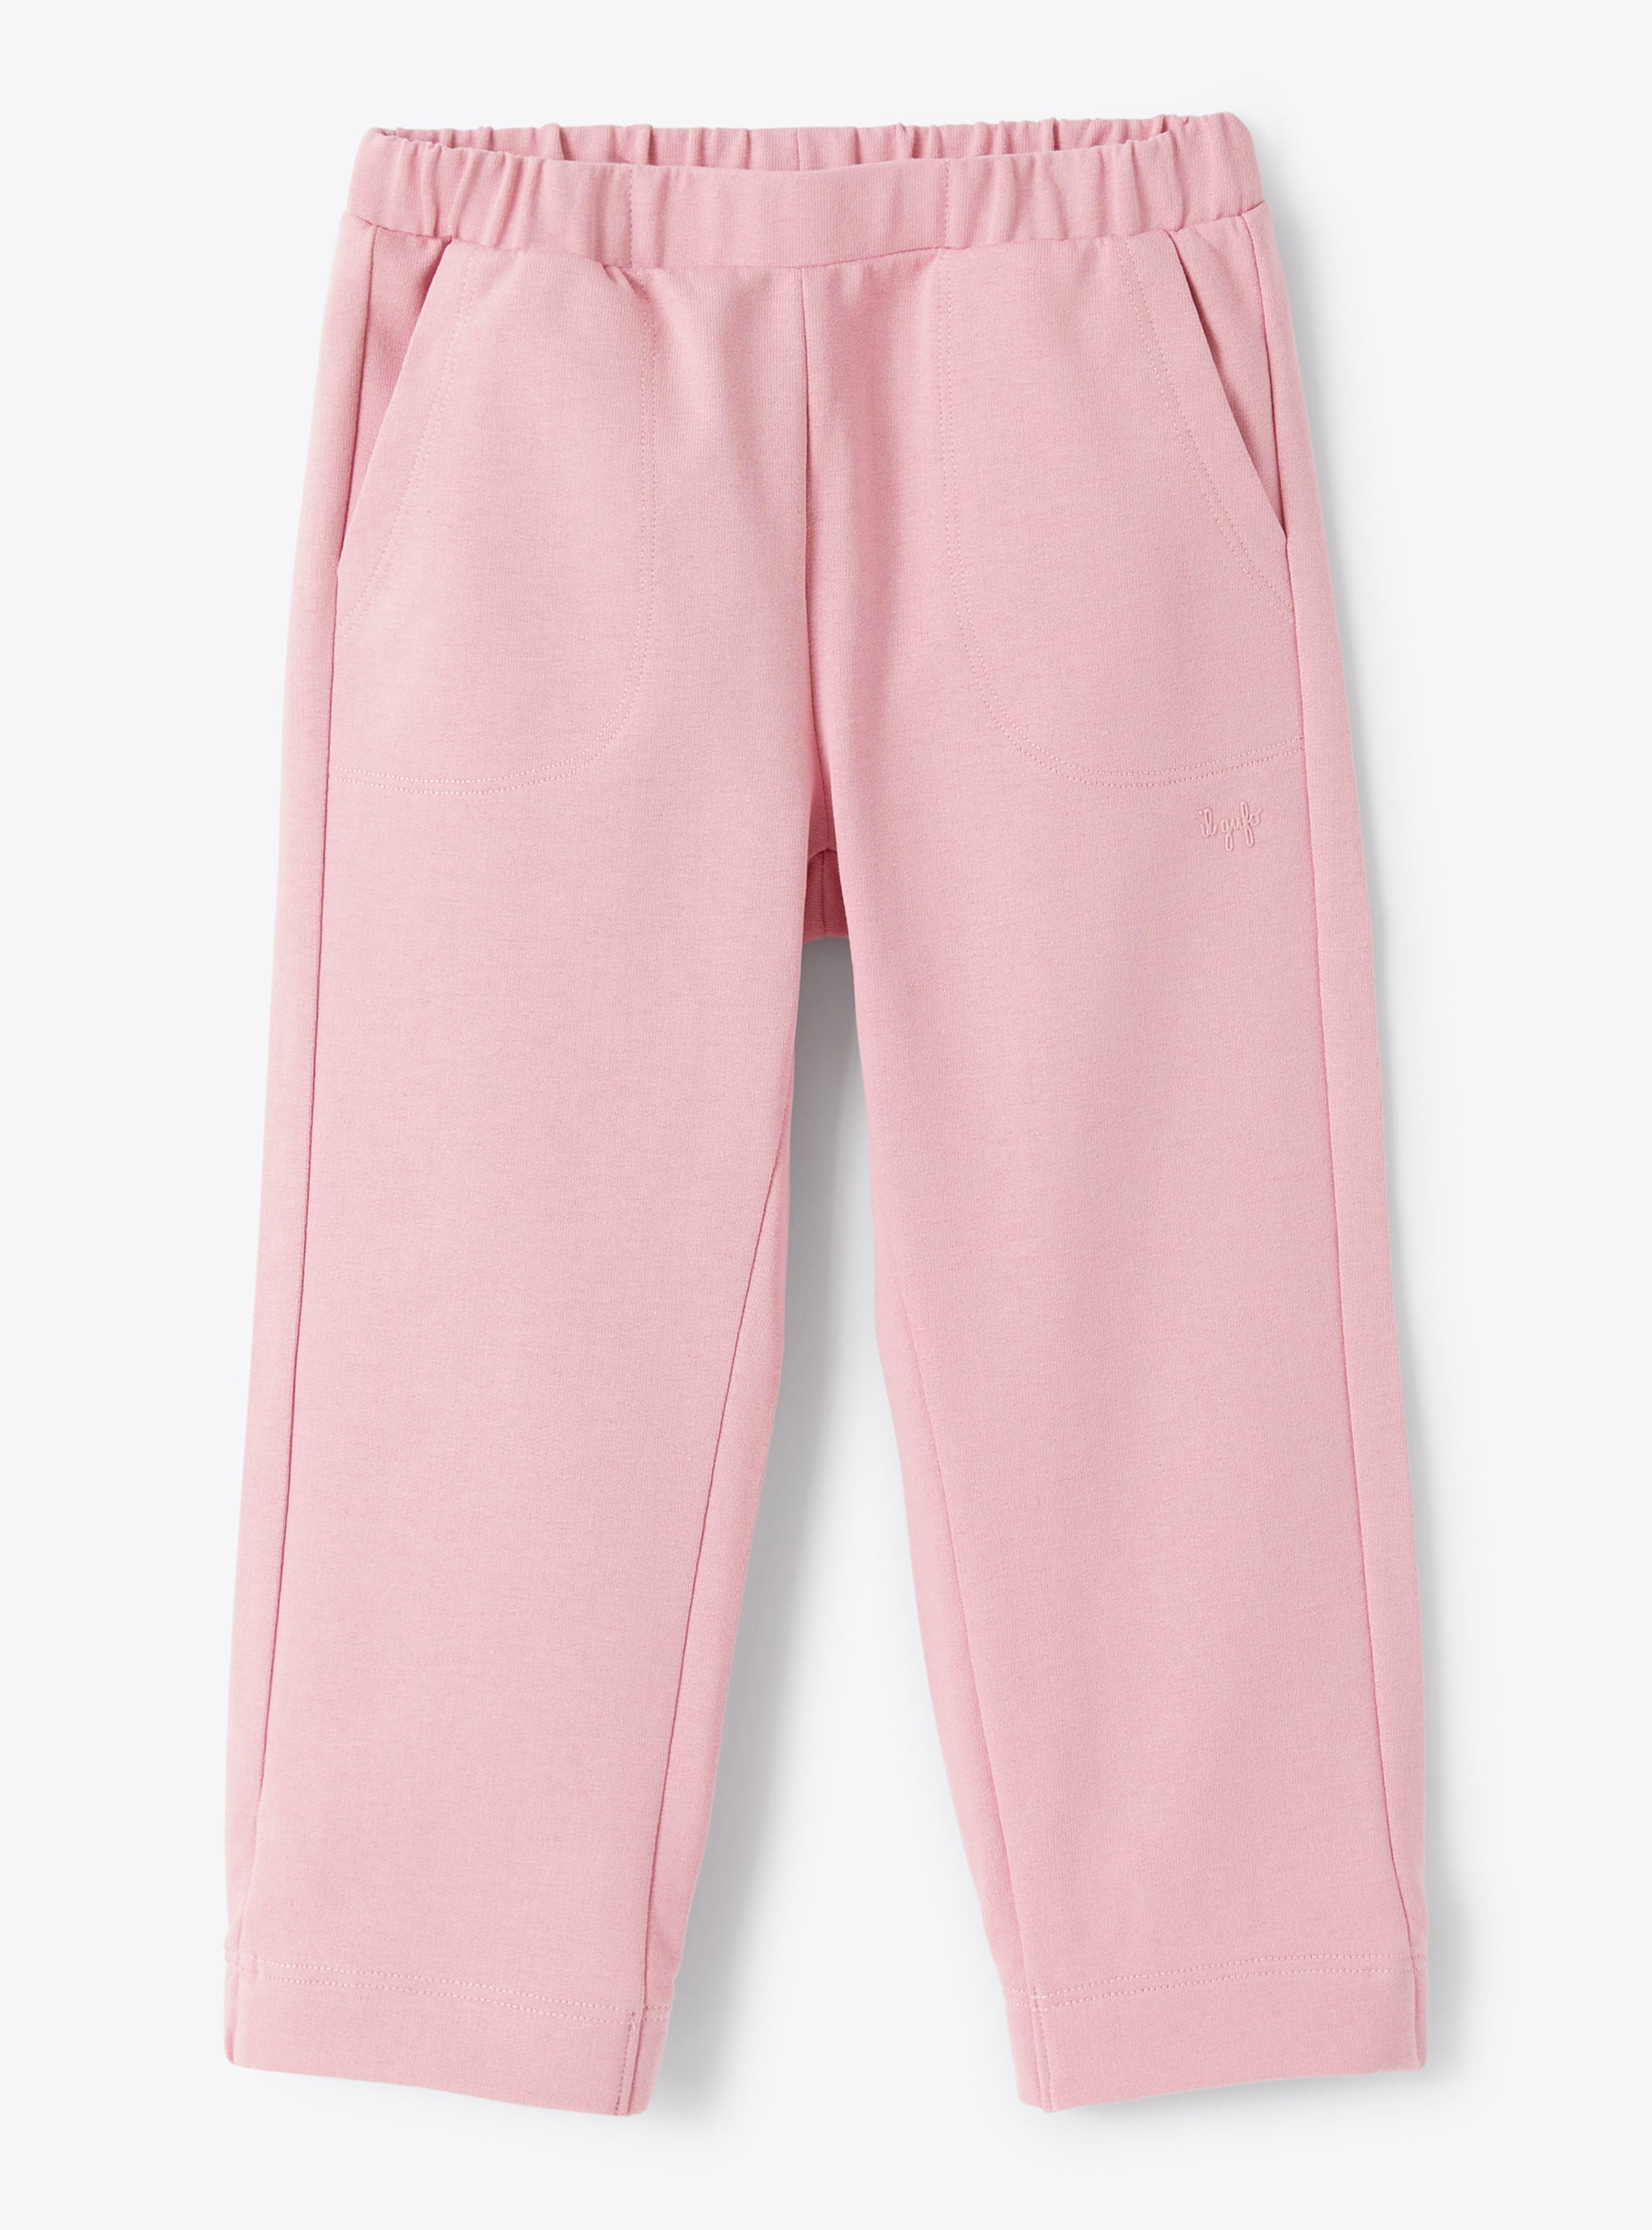 Hose aus rosa Sweatstoff - Hosen - Il Gufo